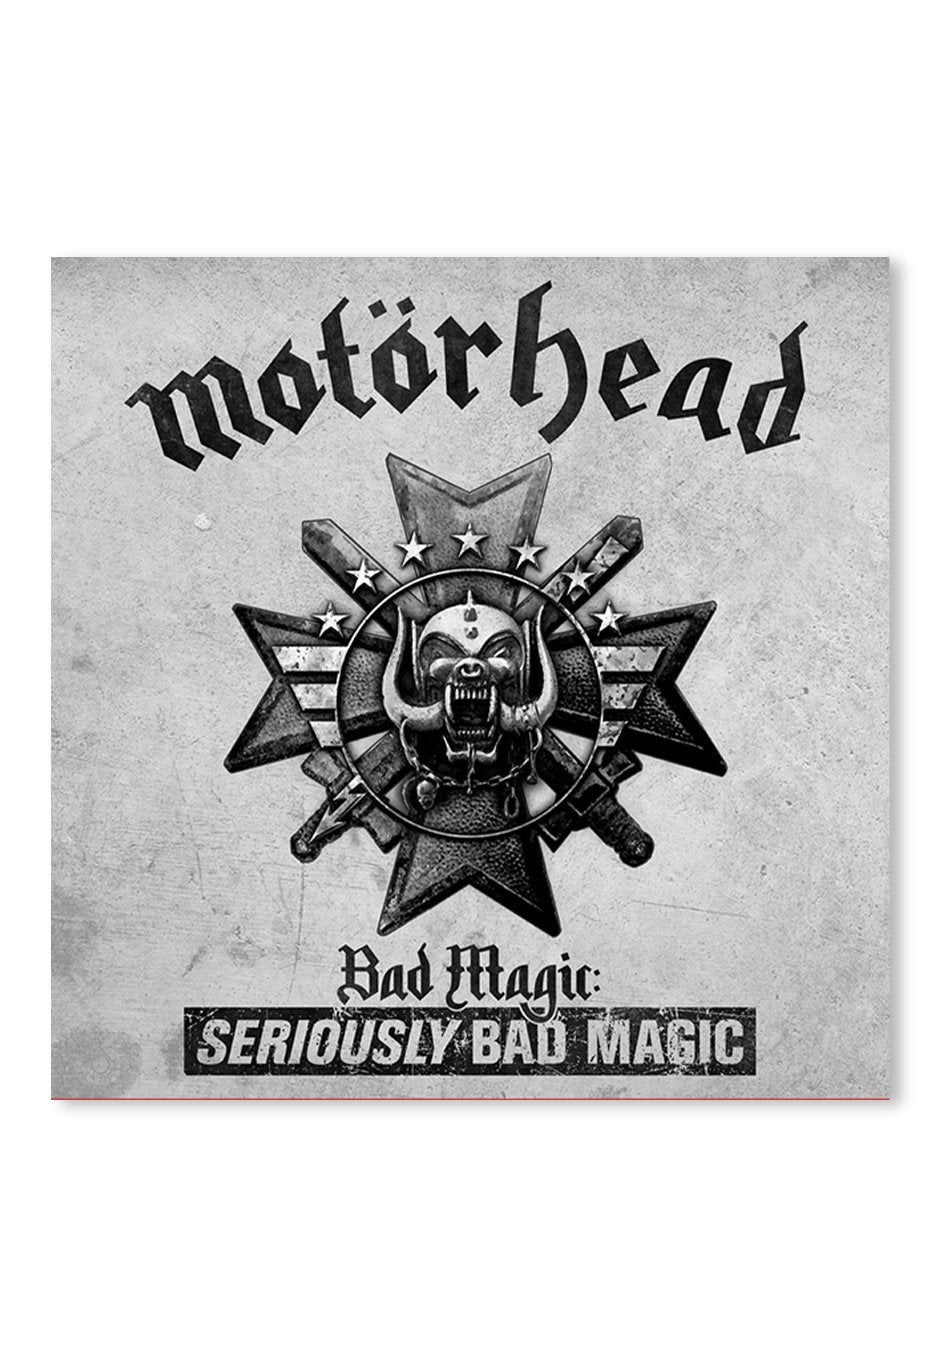 Motörhead - Bad Magic: SERIOUSLY BAD MAGIC Limited Edition - Box Set